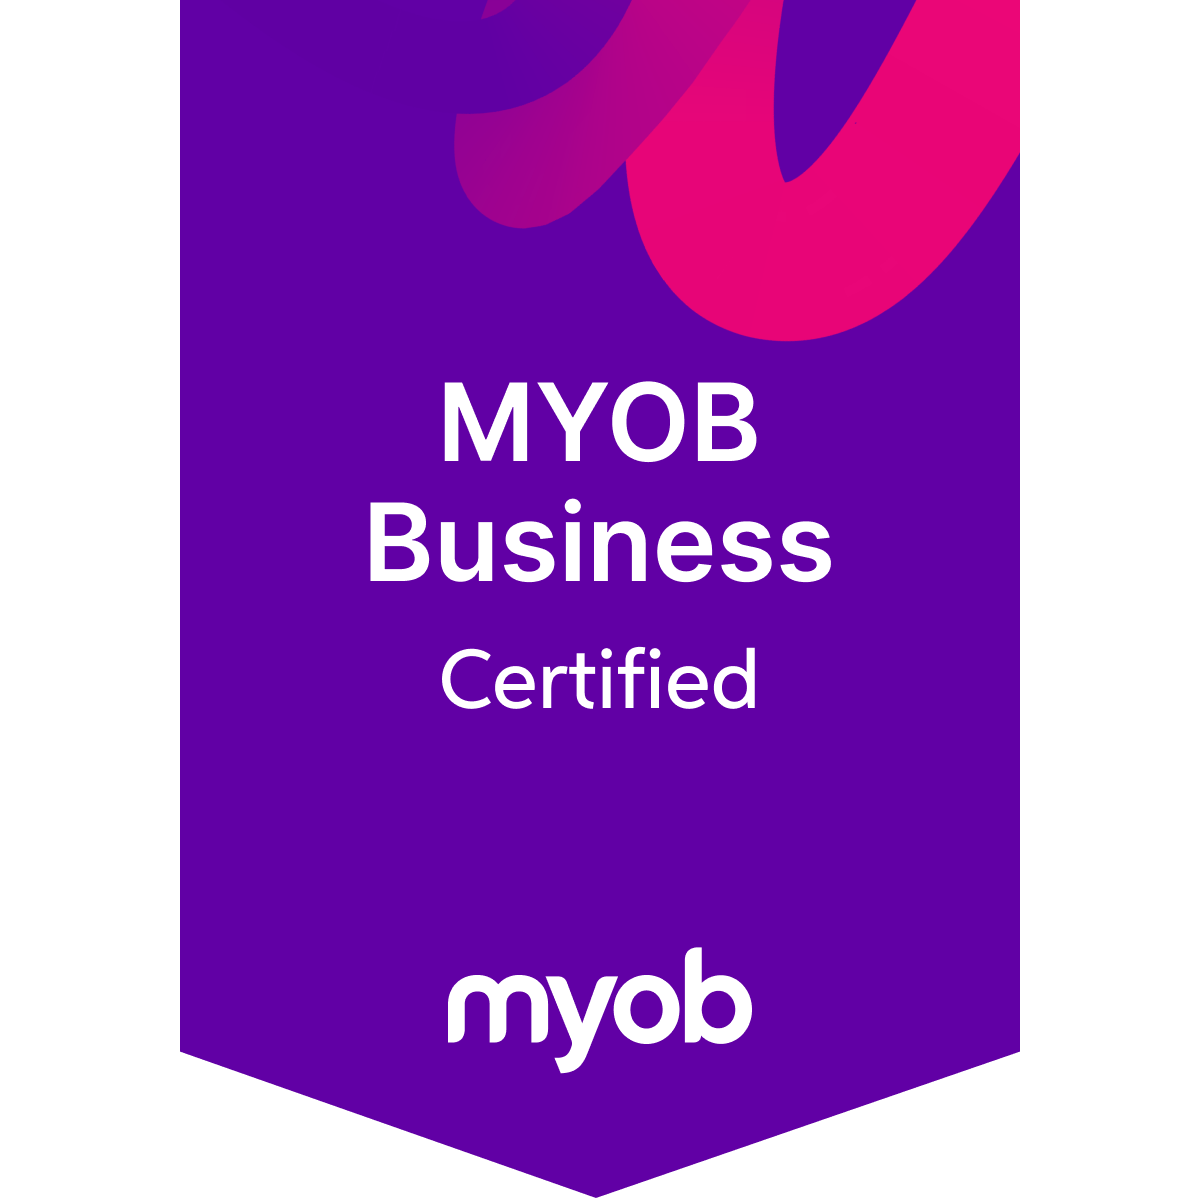 MYOB Business Certified